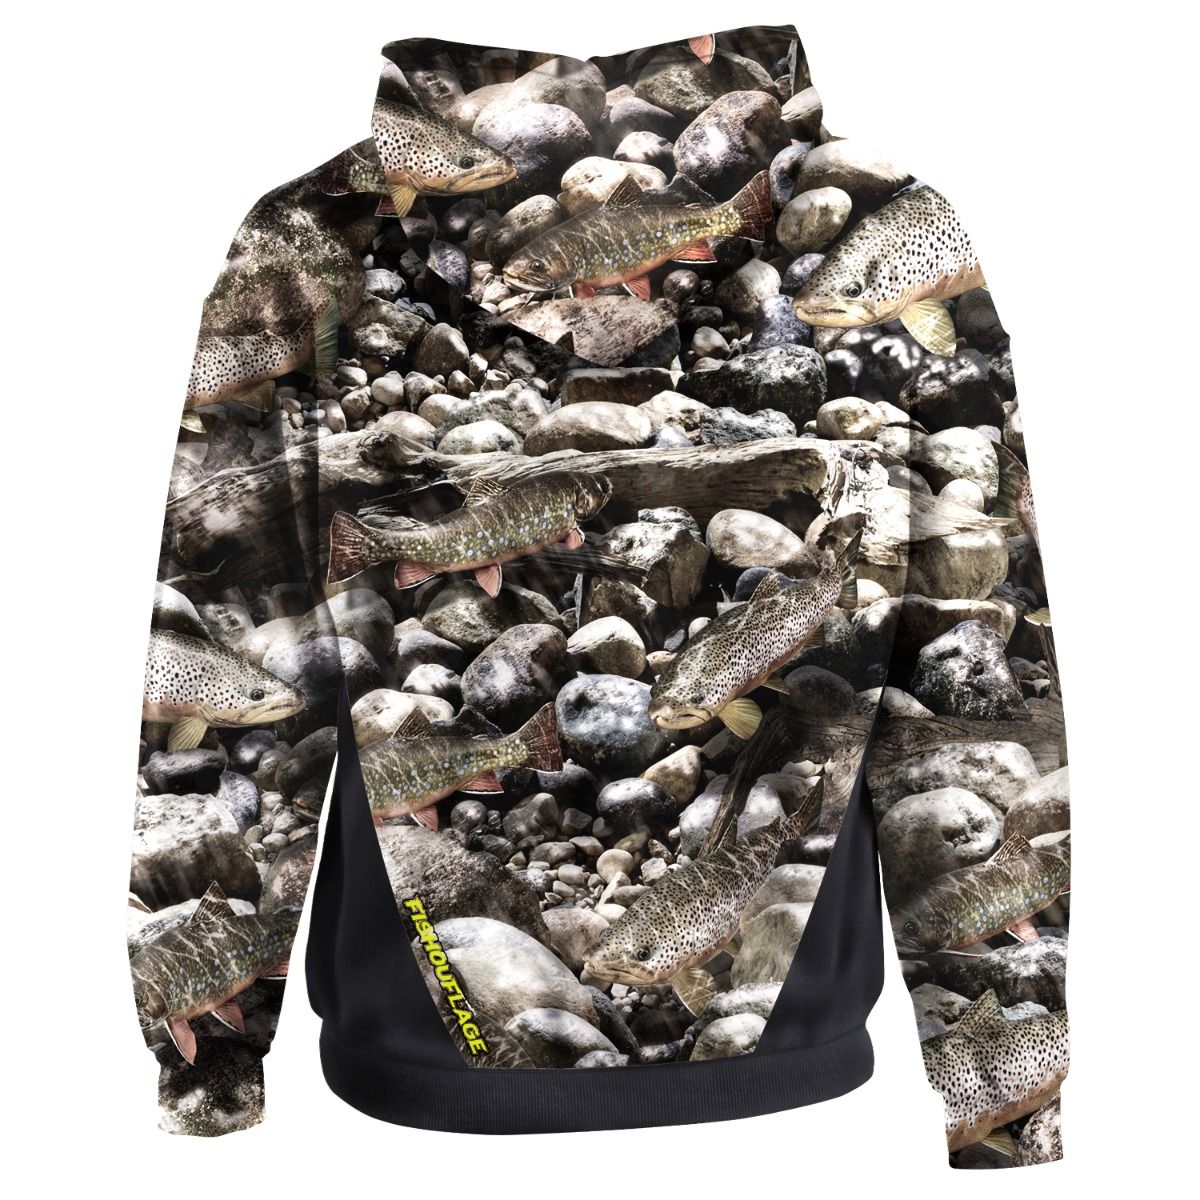 Bass Fishing Hoodies for Men  Fishouflage Sweatshirts & Outerwear